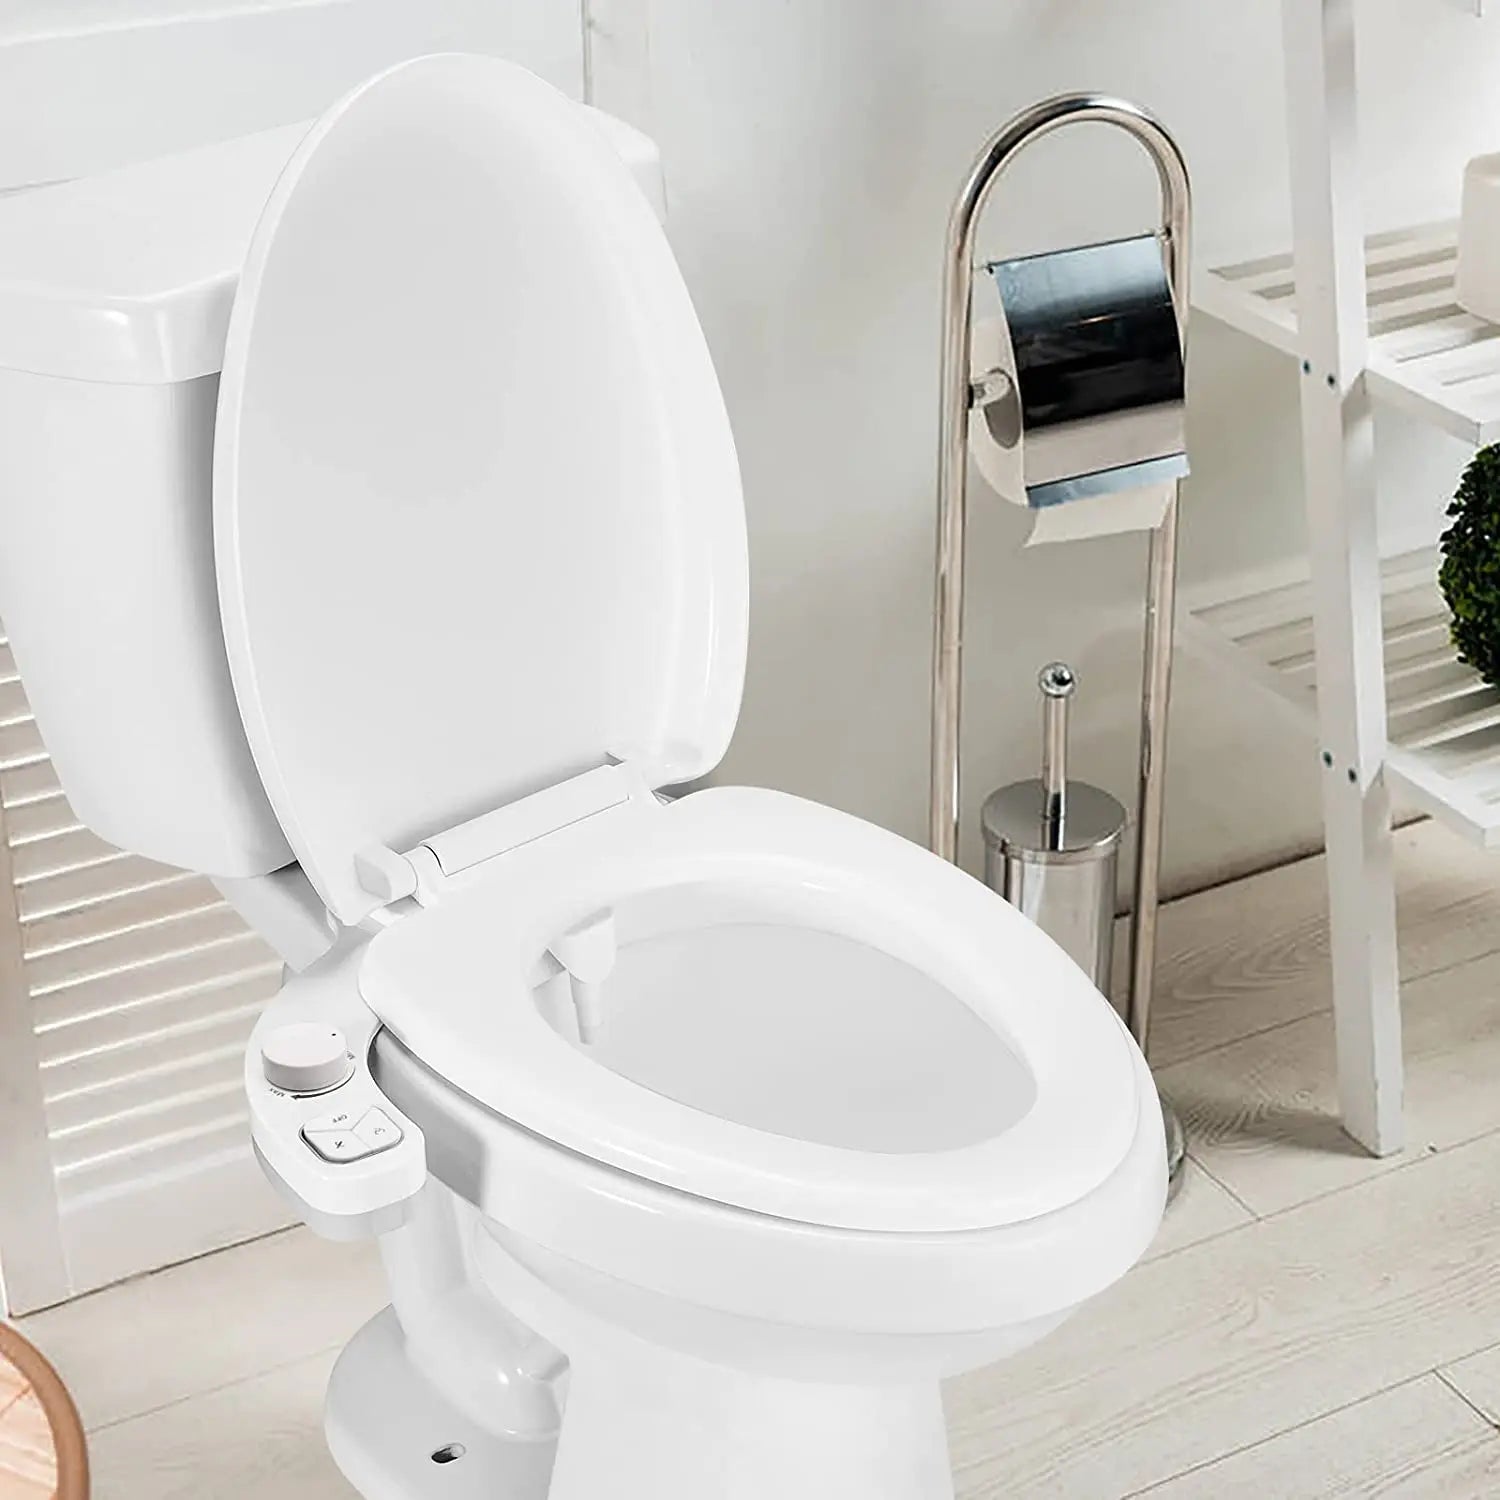 Bidet - Non-Electric Cleaning Water Sprayer Toilet Seat - Easier Life Emporium